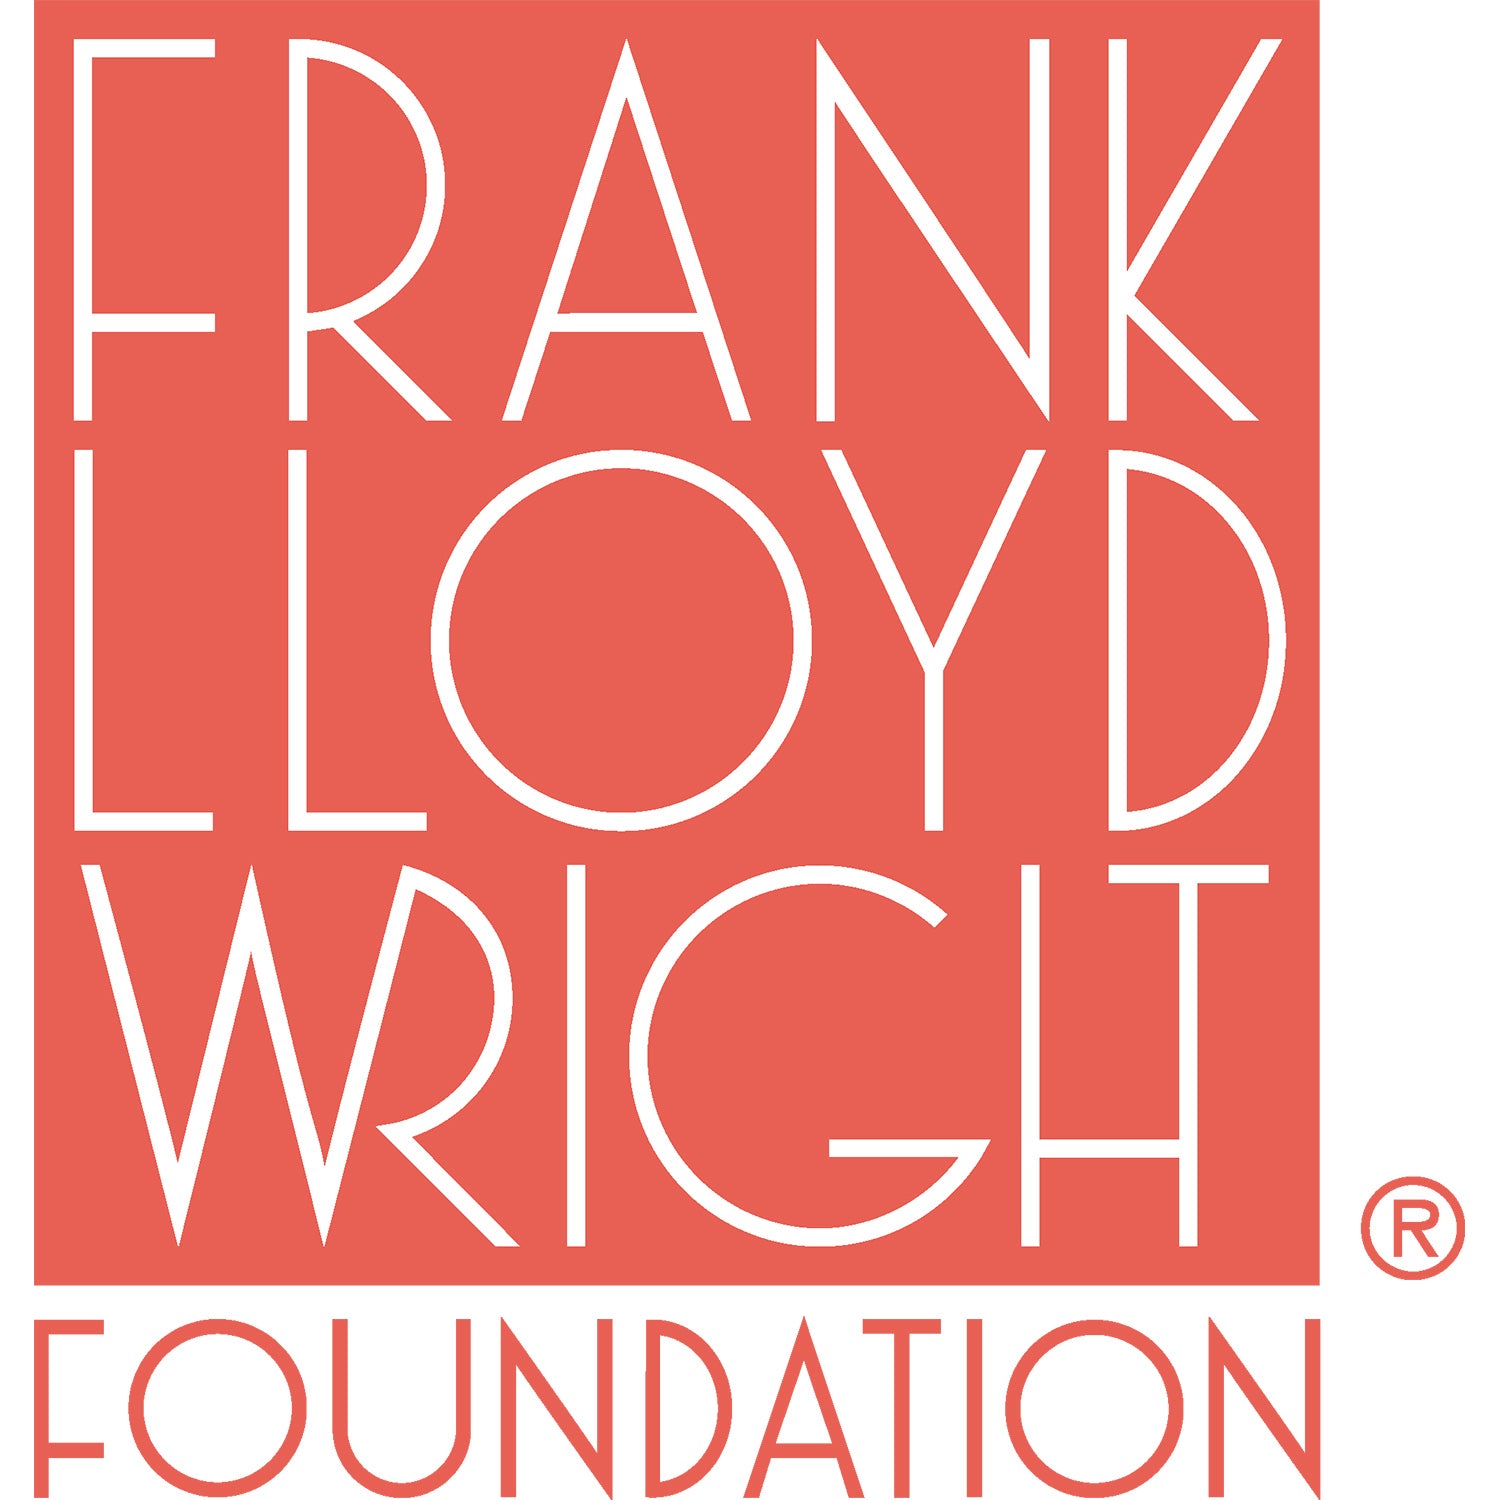 Frank Lloyd Wright April Showers Tumbler Glasses - 11 Ounce - Set of 2